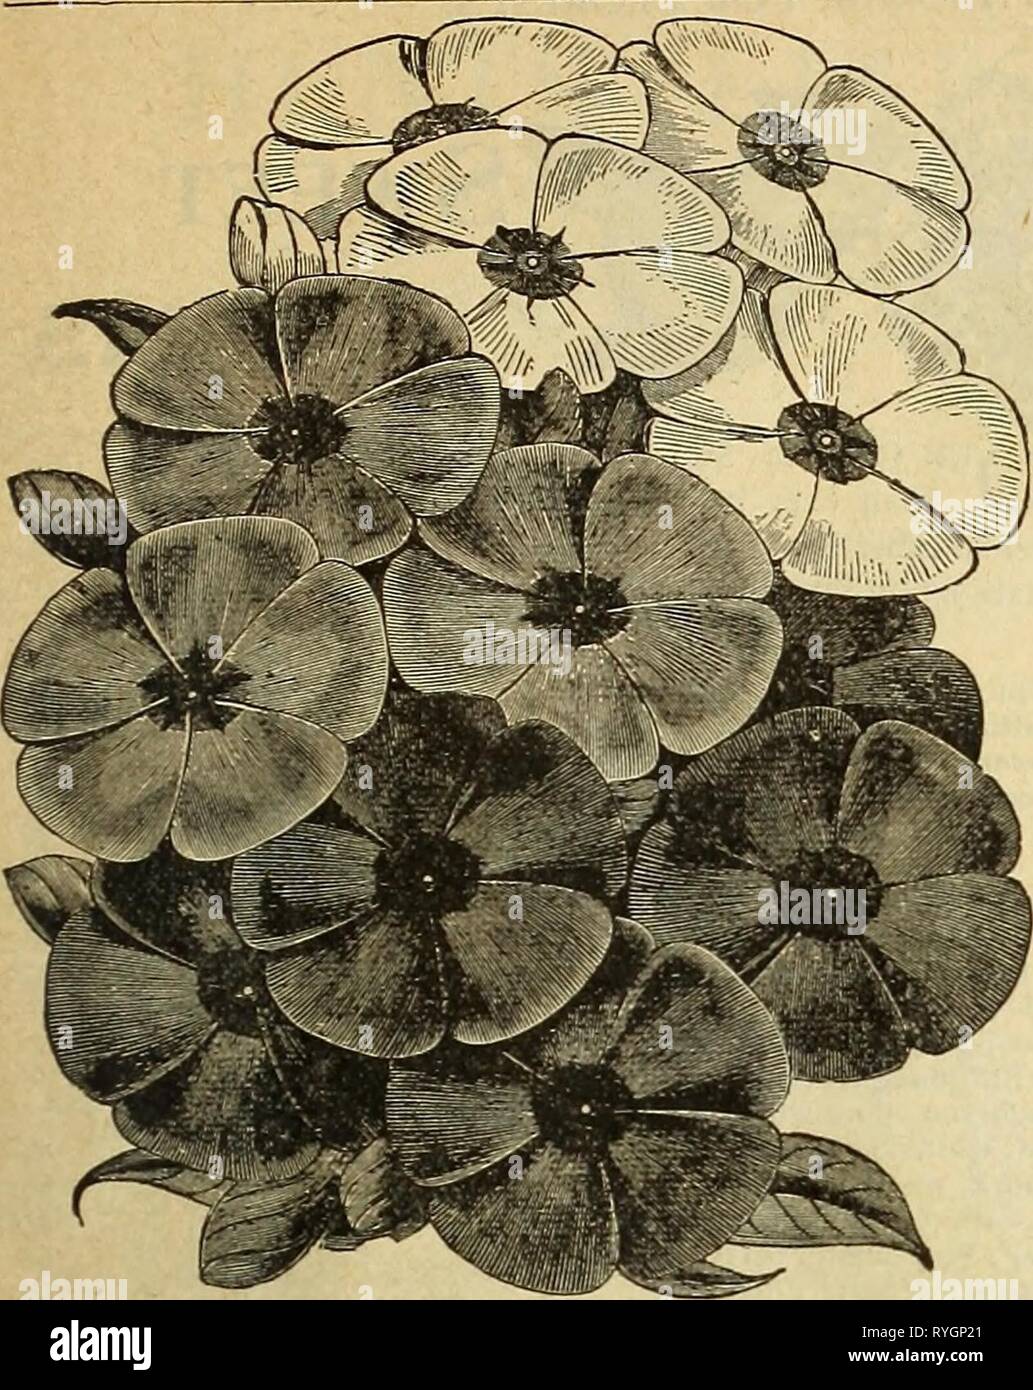 E. H. Hunt's catalogue  ehhuntscatalogu1895ehhu 0 Year: 1895  E. H. HUNT, CHICAGO, CATALOGUE FOR FLORISTS.    PHLOX DRUMMONDI. RICINUS (CASTOR OIL PLANT.) Per oz. Borboniensis 15 Gibsoni.. IS Per oz. Africanus 15 Sanguineus 10 Cambodgensis. (,U, Mixed lb., 75c. 10 PHLOX DRUMMONDI. Trade Pkt. Oz. White, Scarlet, Pink, each 10 60 Mixed.. : 10 40 Atropurpurea, blood red  10 GO Star of Quedlinburg 10 GRANDIFLORA; OR, LARGE-FL. VARIETIES. Alba, white; Coccinea, scarlet; Rosea, pink, each 10 1.00 Splendens, crimson, white eye 10 1.00 Isabellina, yellow 15 1.50 Grandiflora Mixed 10 L00 DWARF; OR, NAN Stock Photo